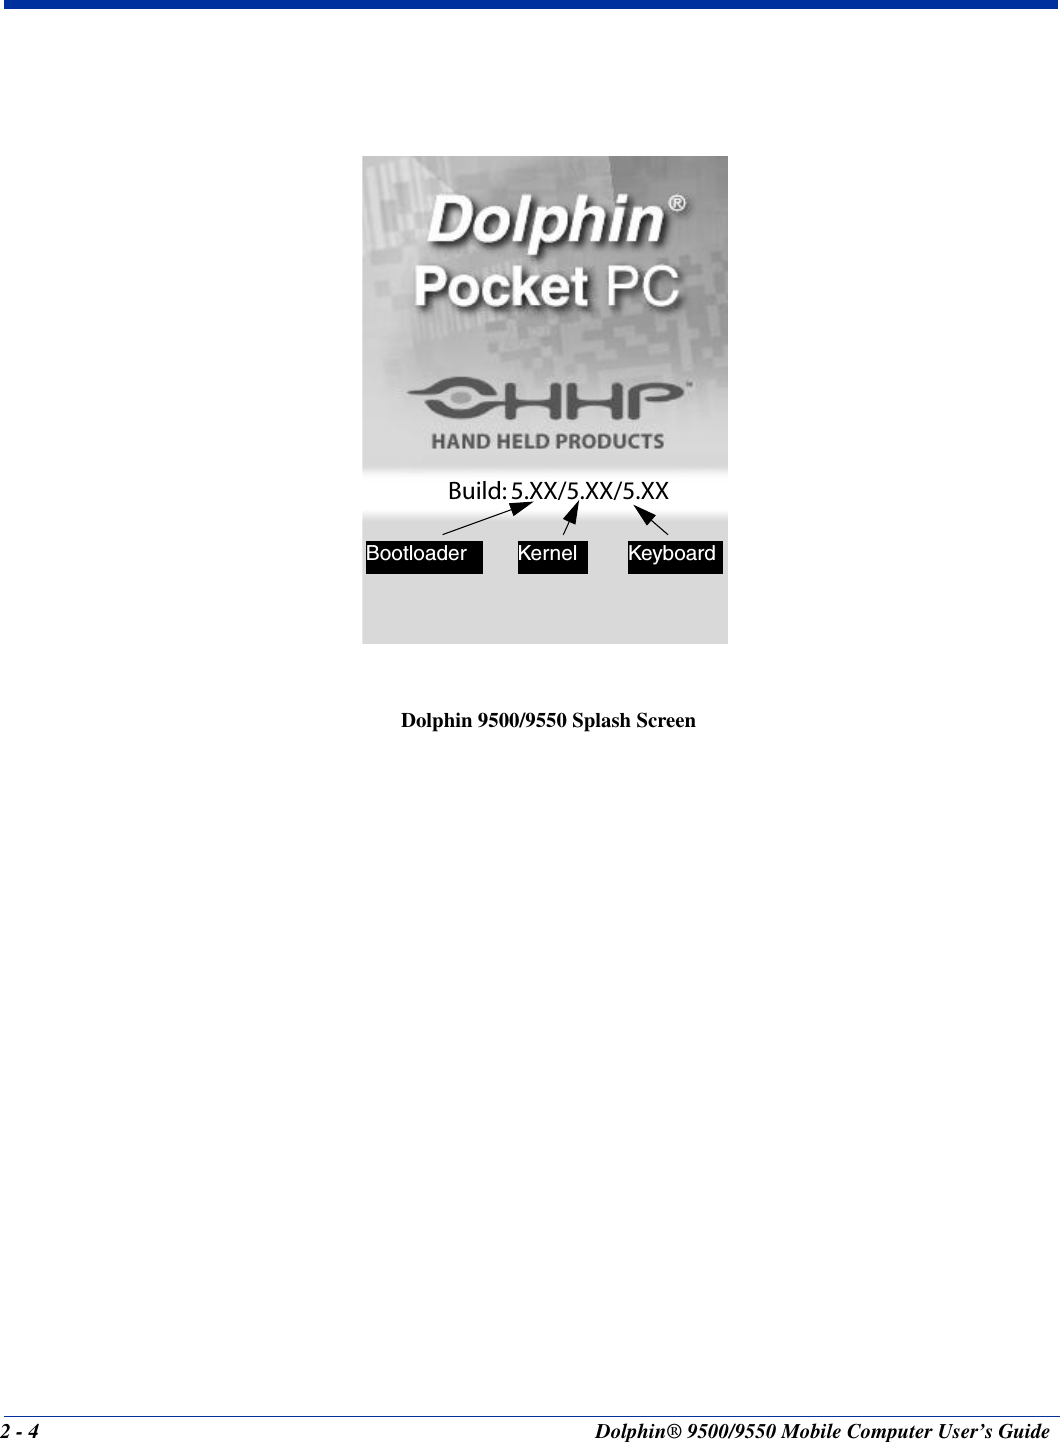 2 - 4 Dolphin® 9500/9550 Mobile Computer User’s GuideDolphin 9500/9550 Splash ScreenBuild: 5.XX/5.XX/5.XXKernel KeyboardBootloader